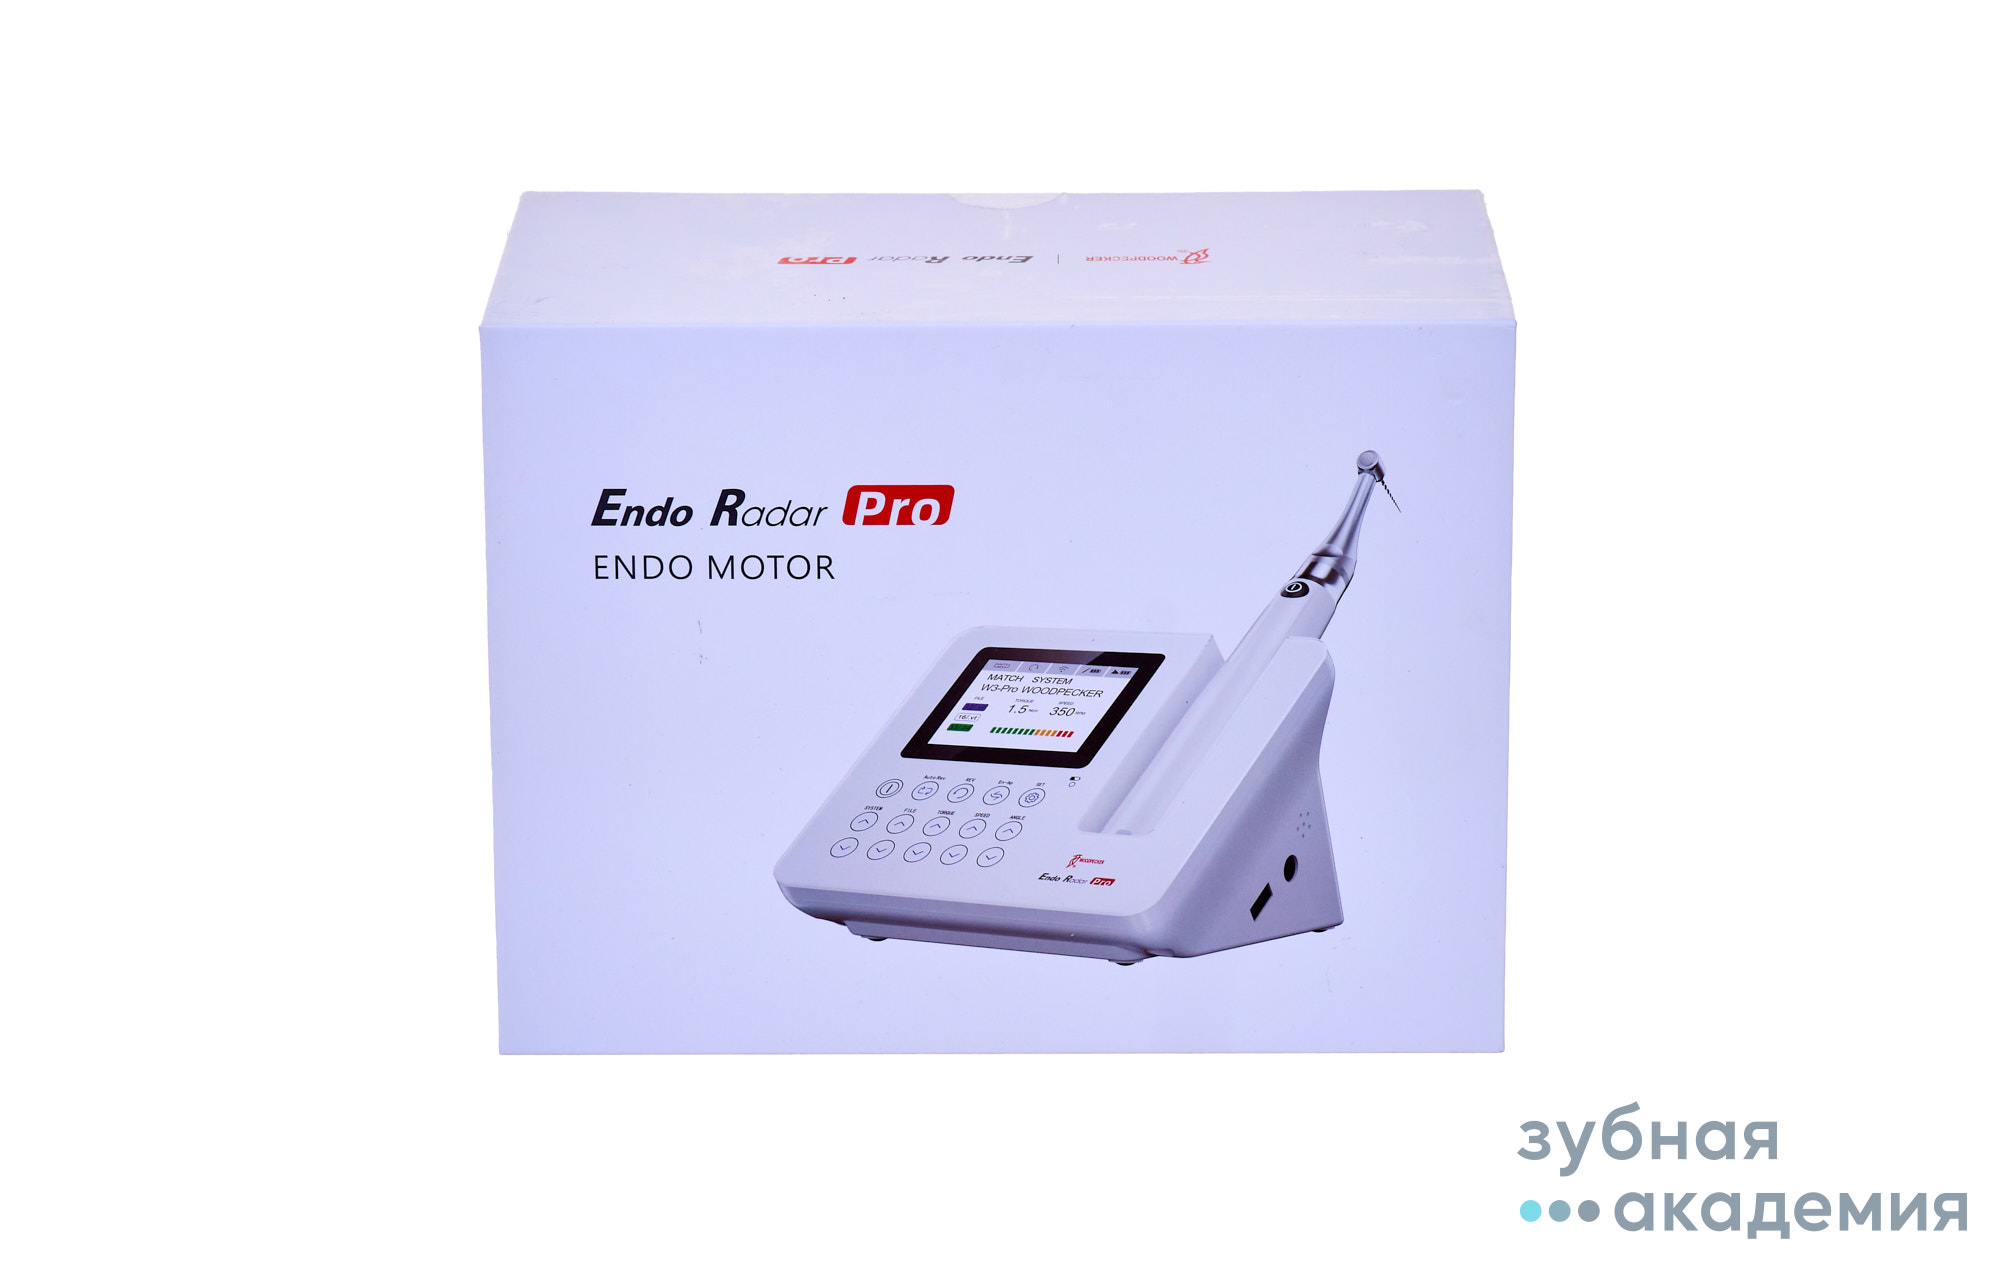 Endo Motor Endo Radar PRO эндомотор/Woodpecker/Китай